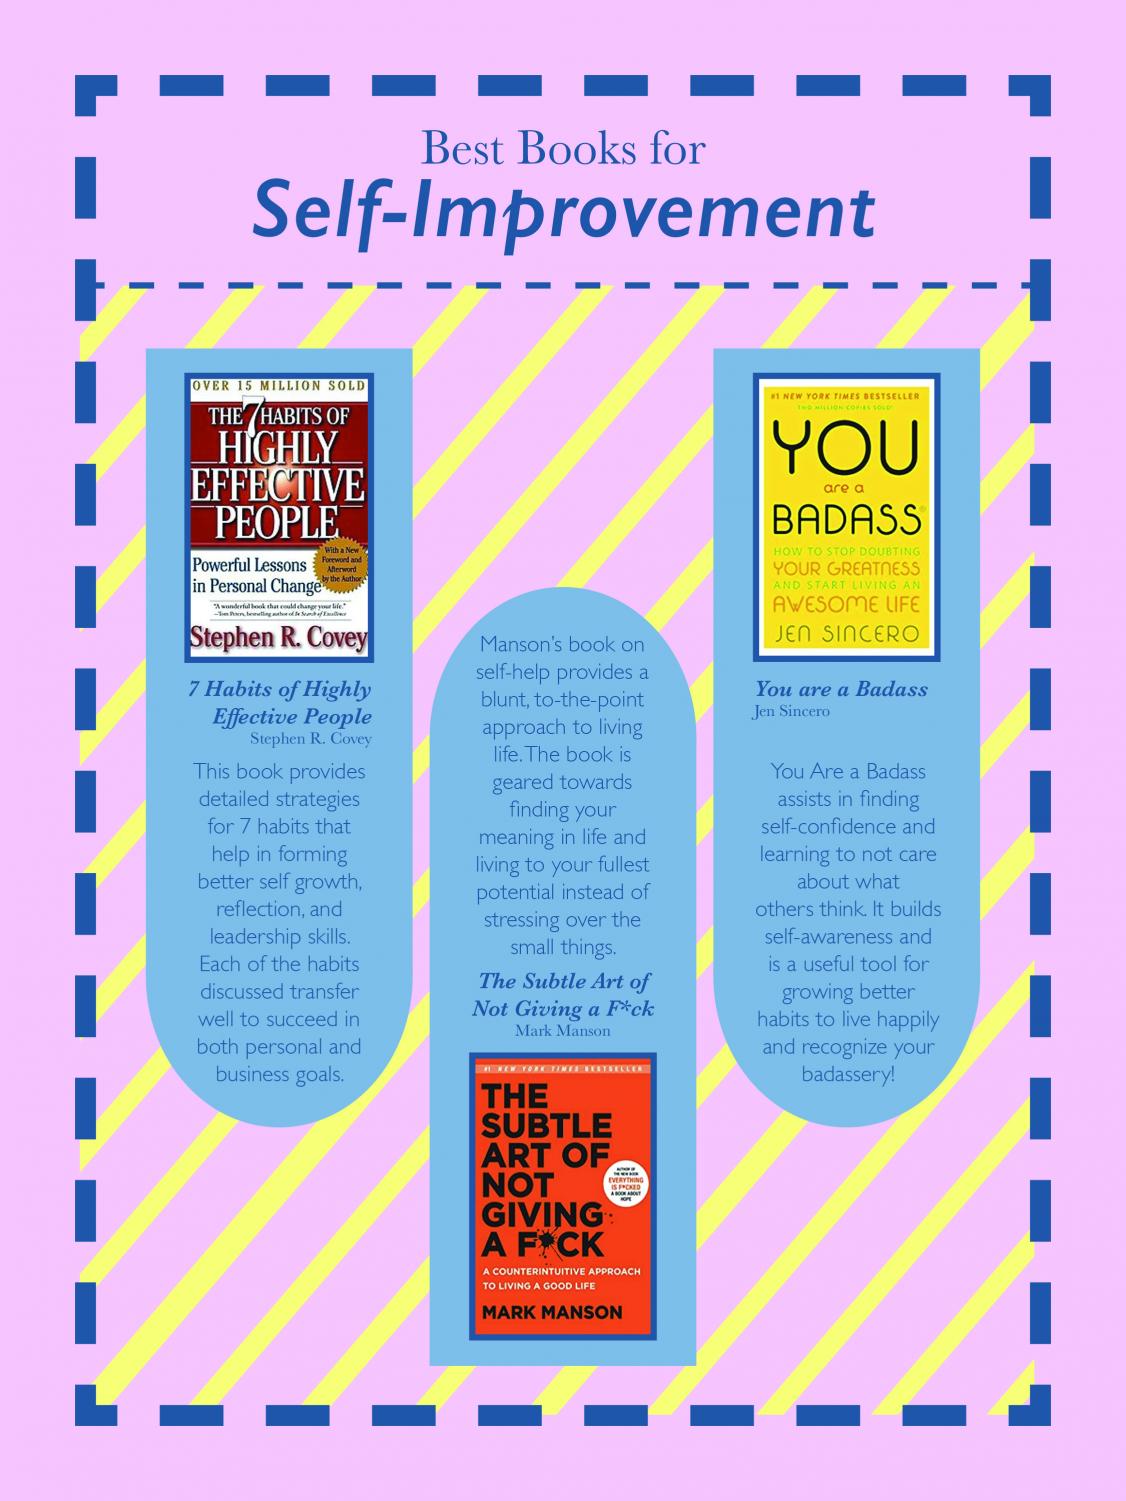 Best Books for SelfImprovement The Media Group